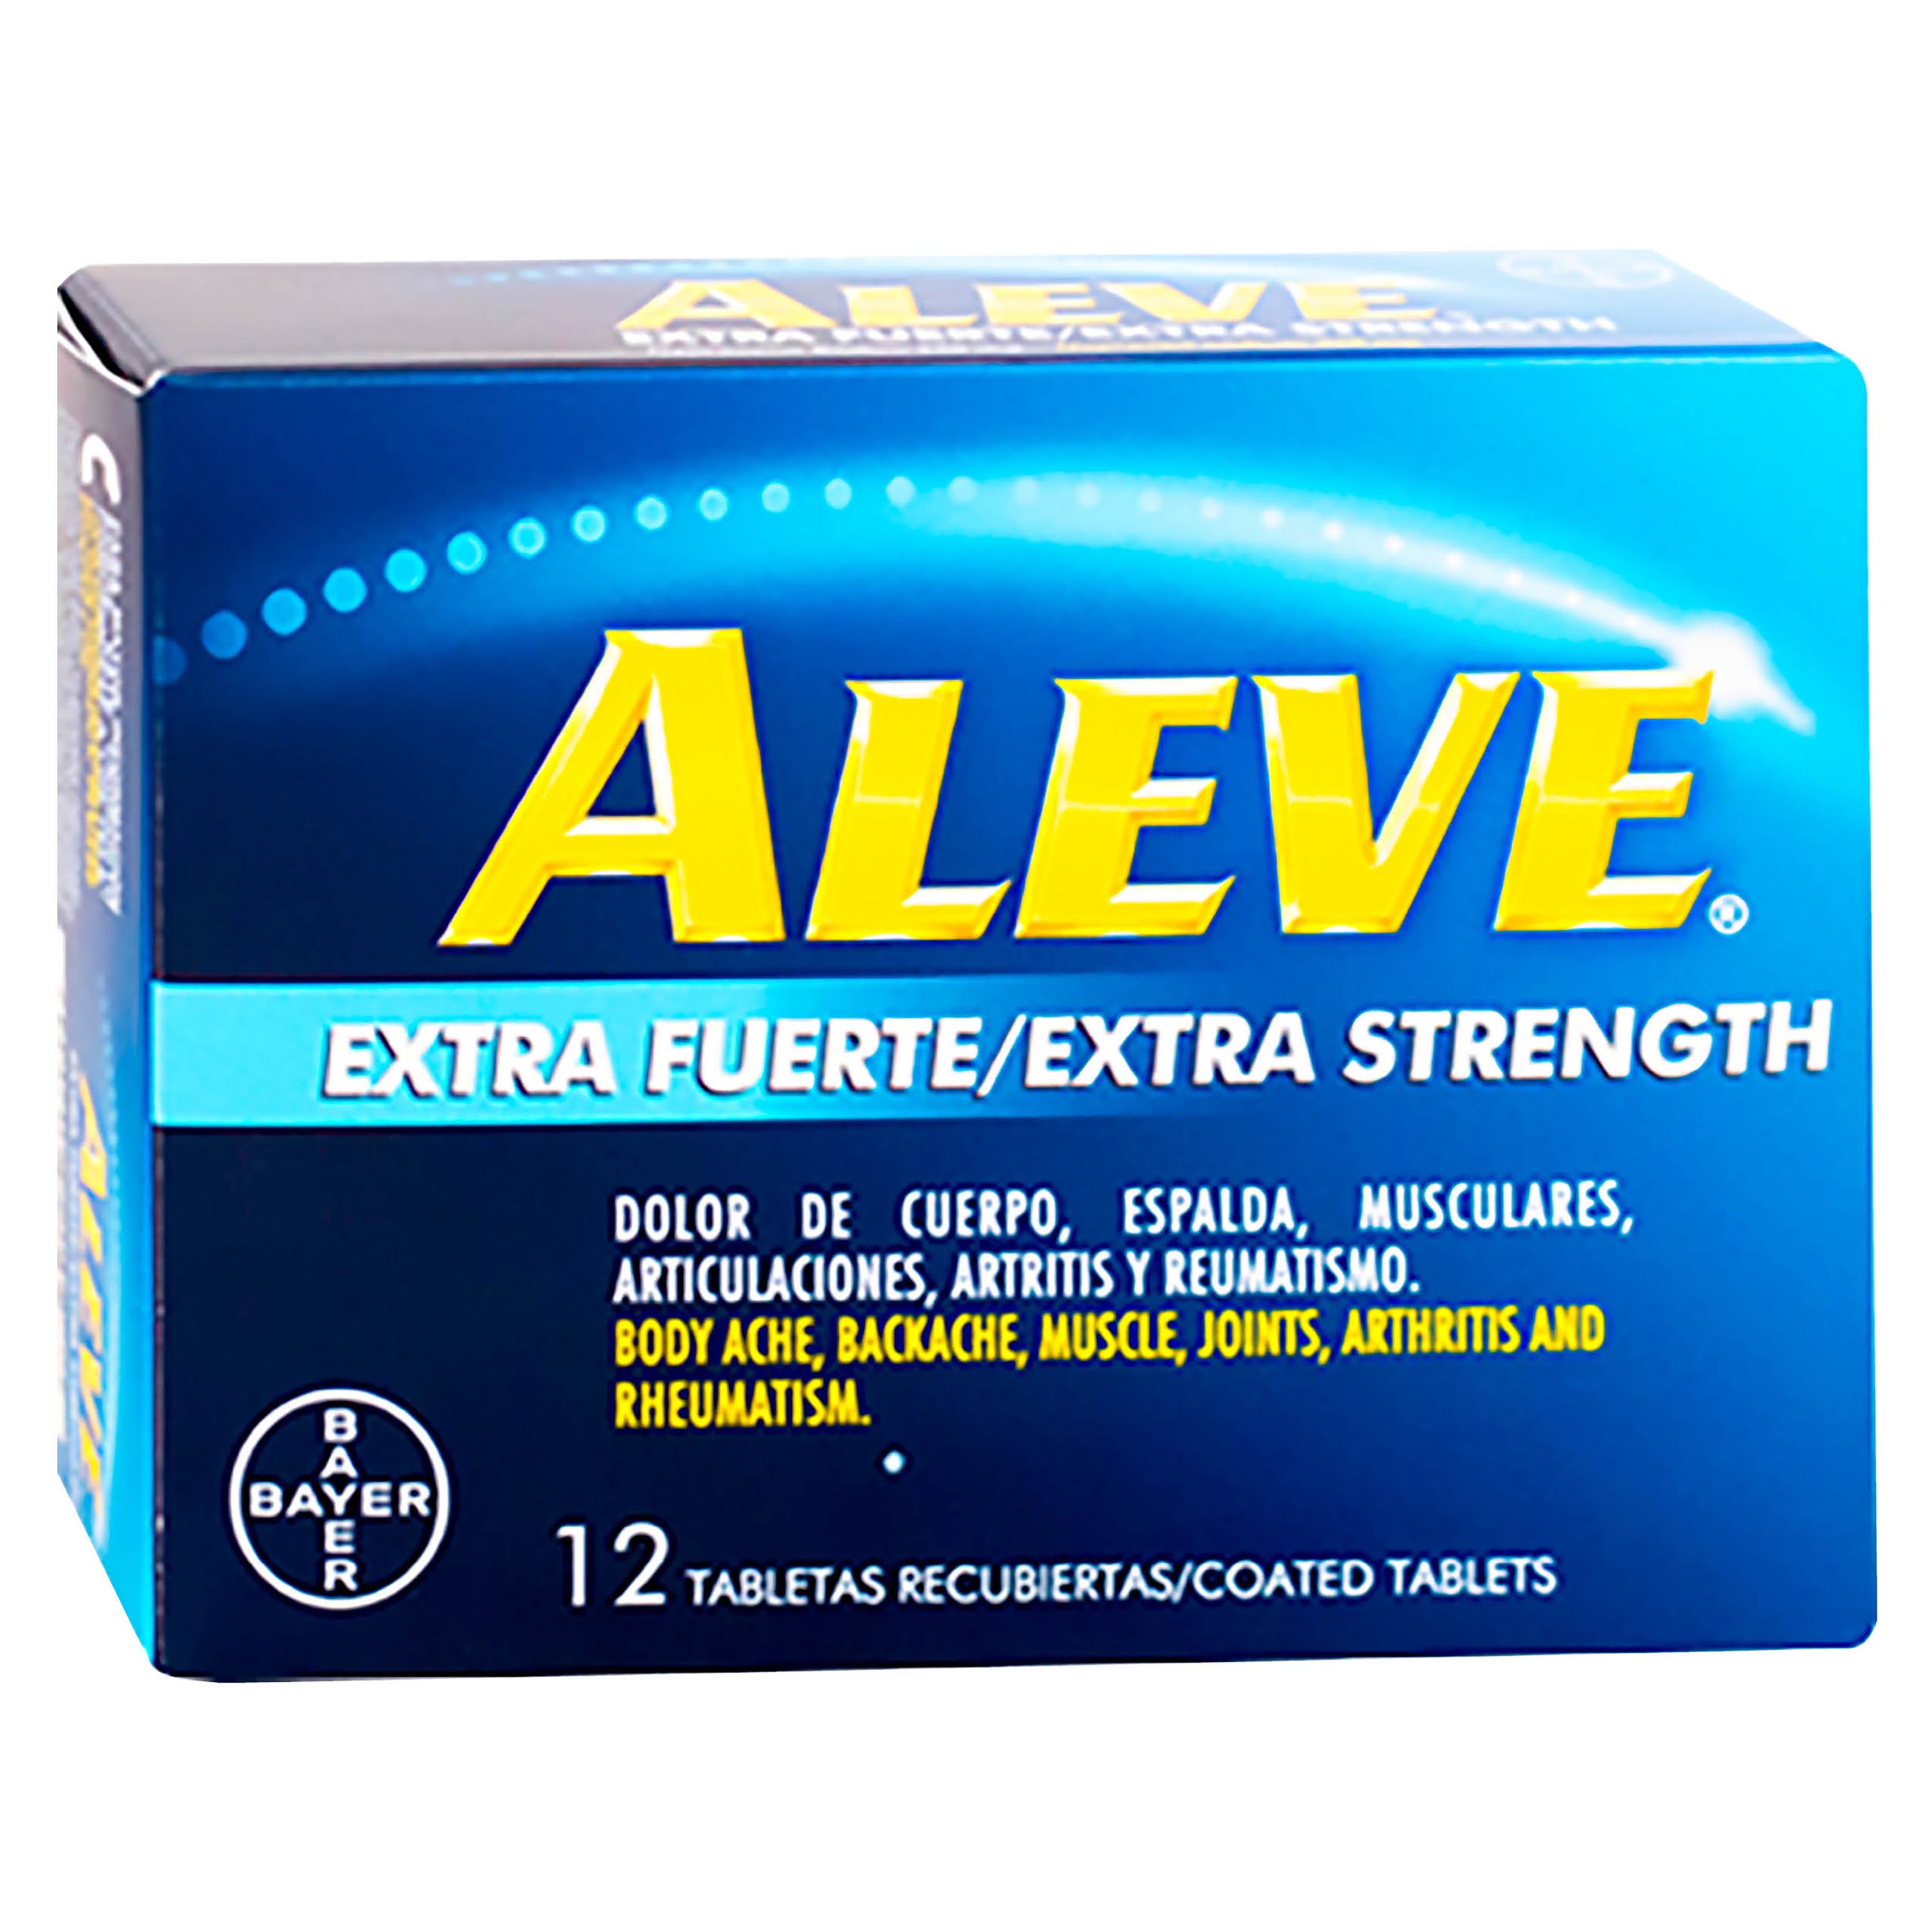 Aleve-Extra-Fuerte-12-Tabletas-1-4653